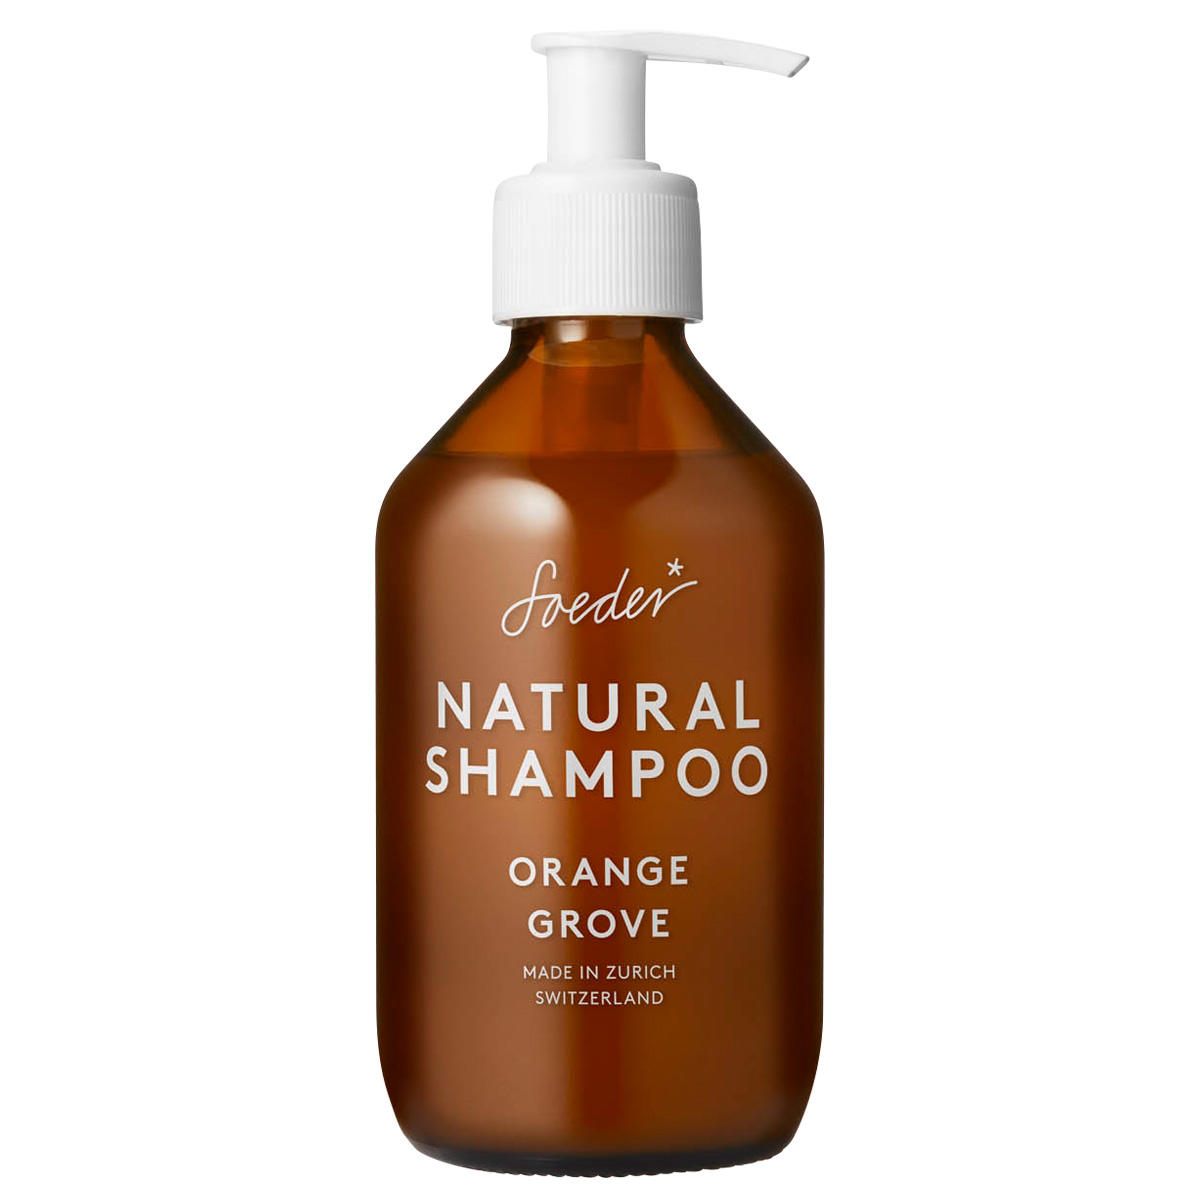 Soeder Natural Shampoo Orange Grove  - 1